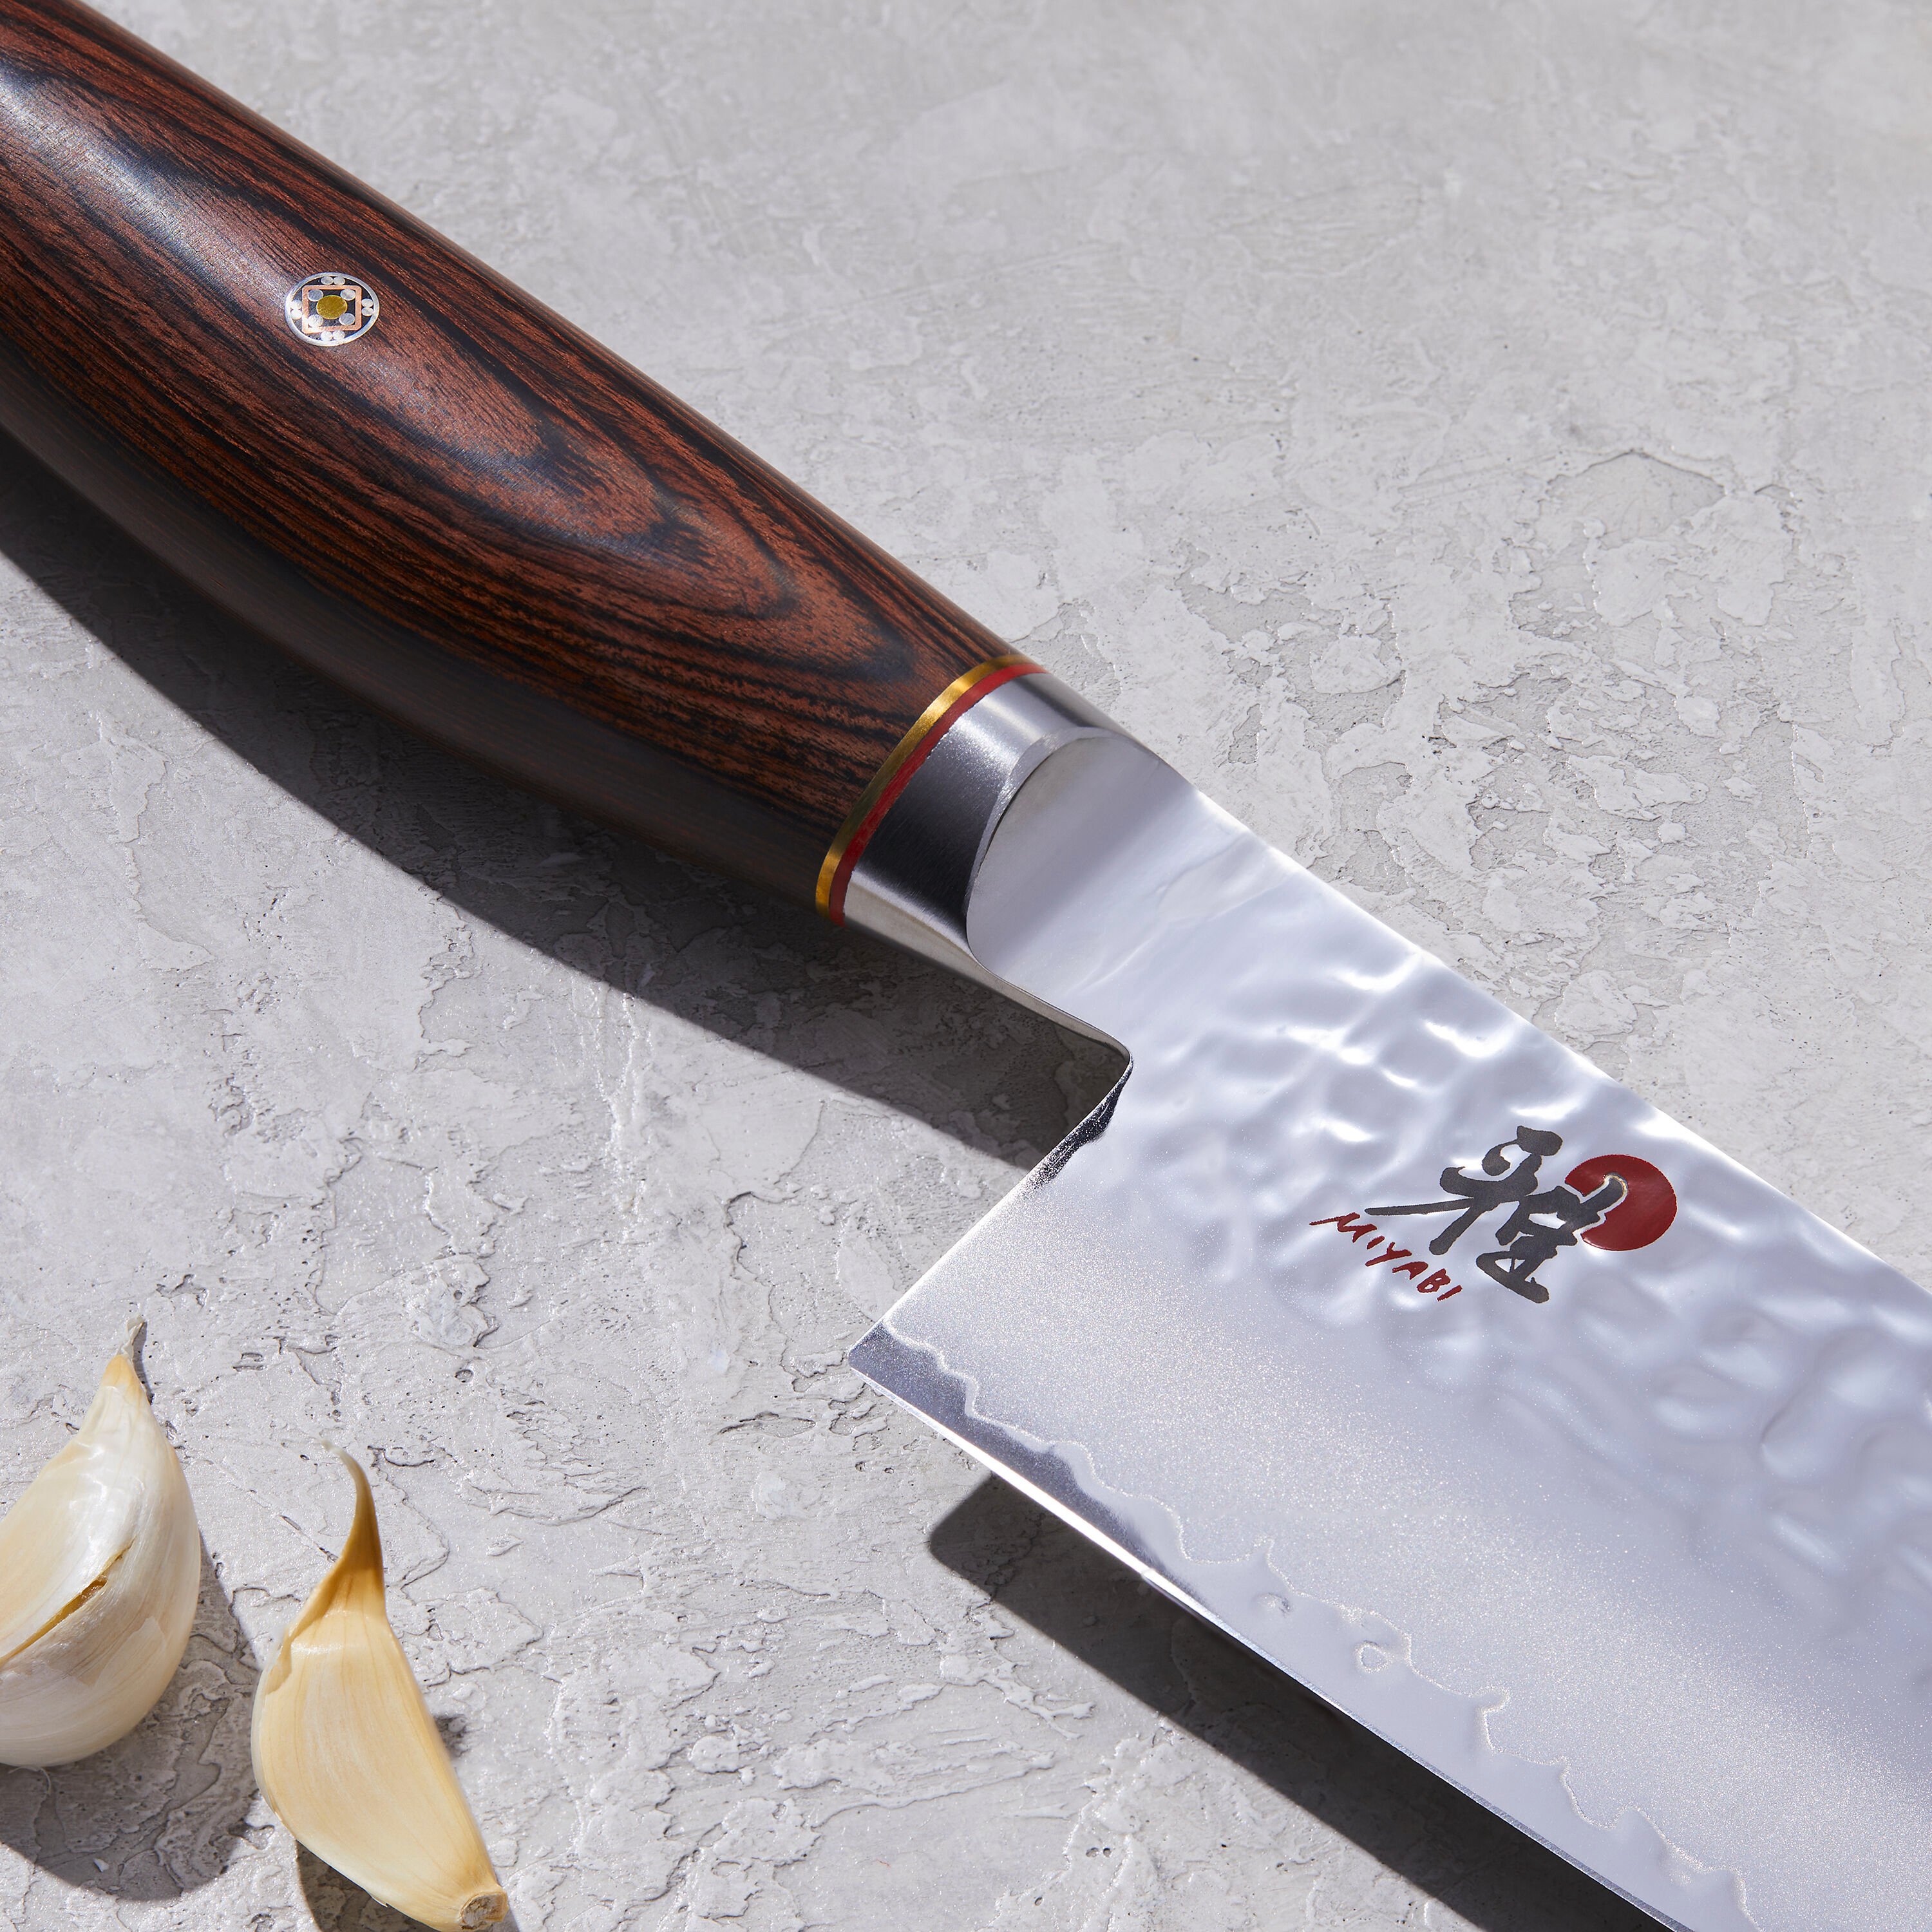 Miyabi Artisan 5.5-inch Prep Knife - Stainless Steel - Bed Bath & Beyond -  14291506